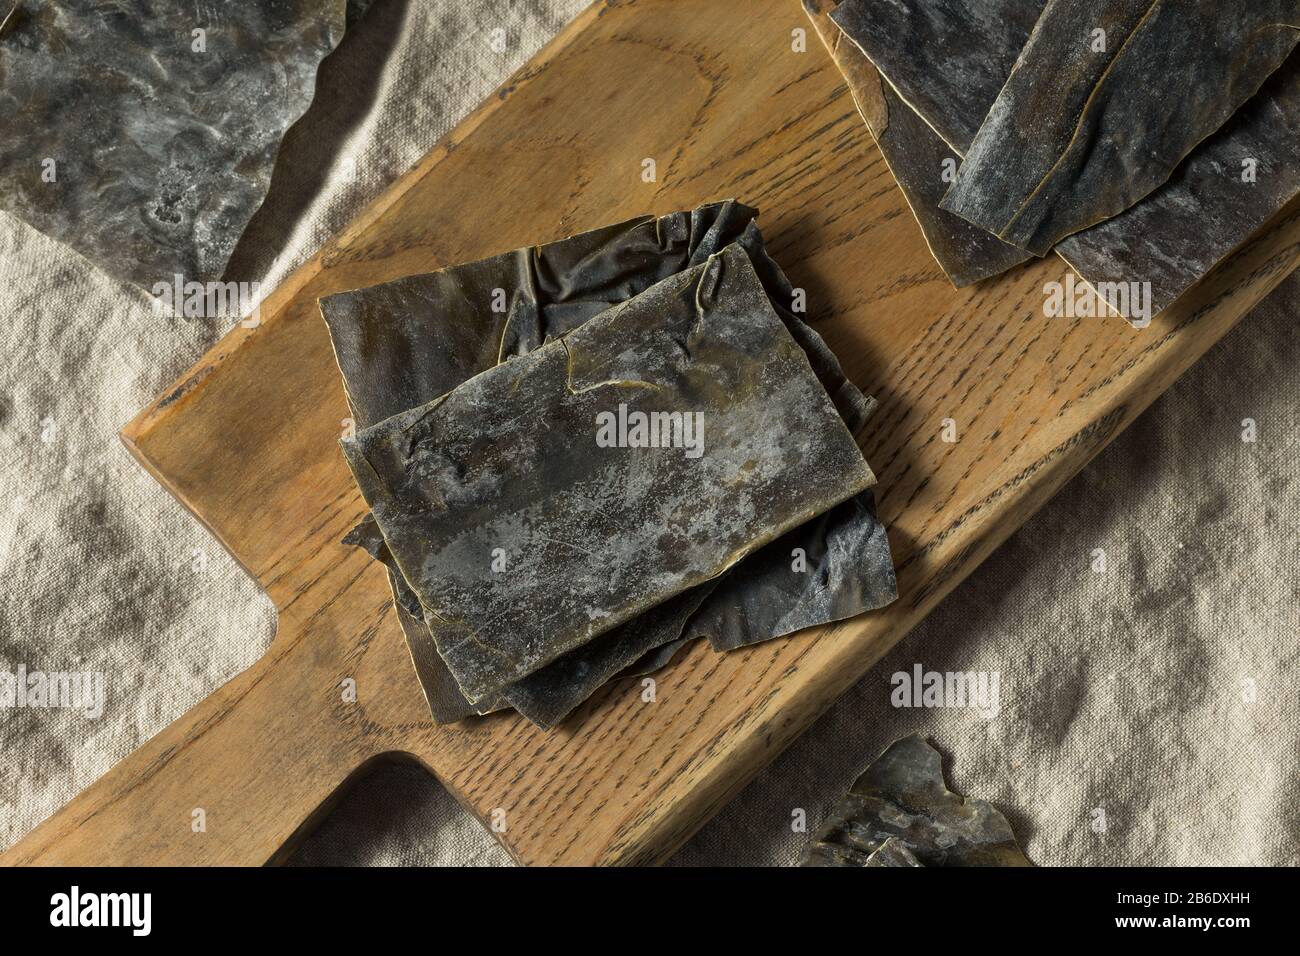 Raw Dried Kombu Kelp Seaweed Ready to Cook Stock Photo